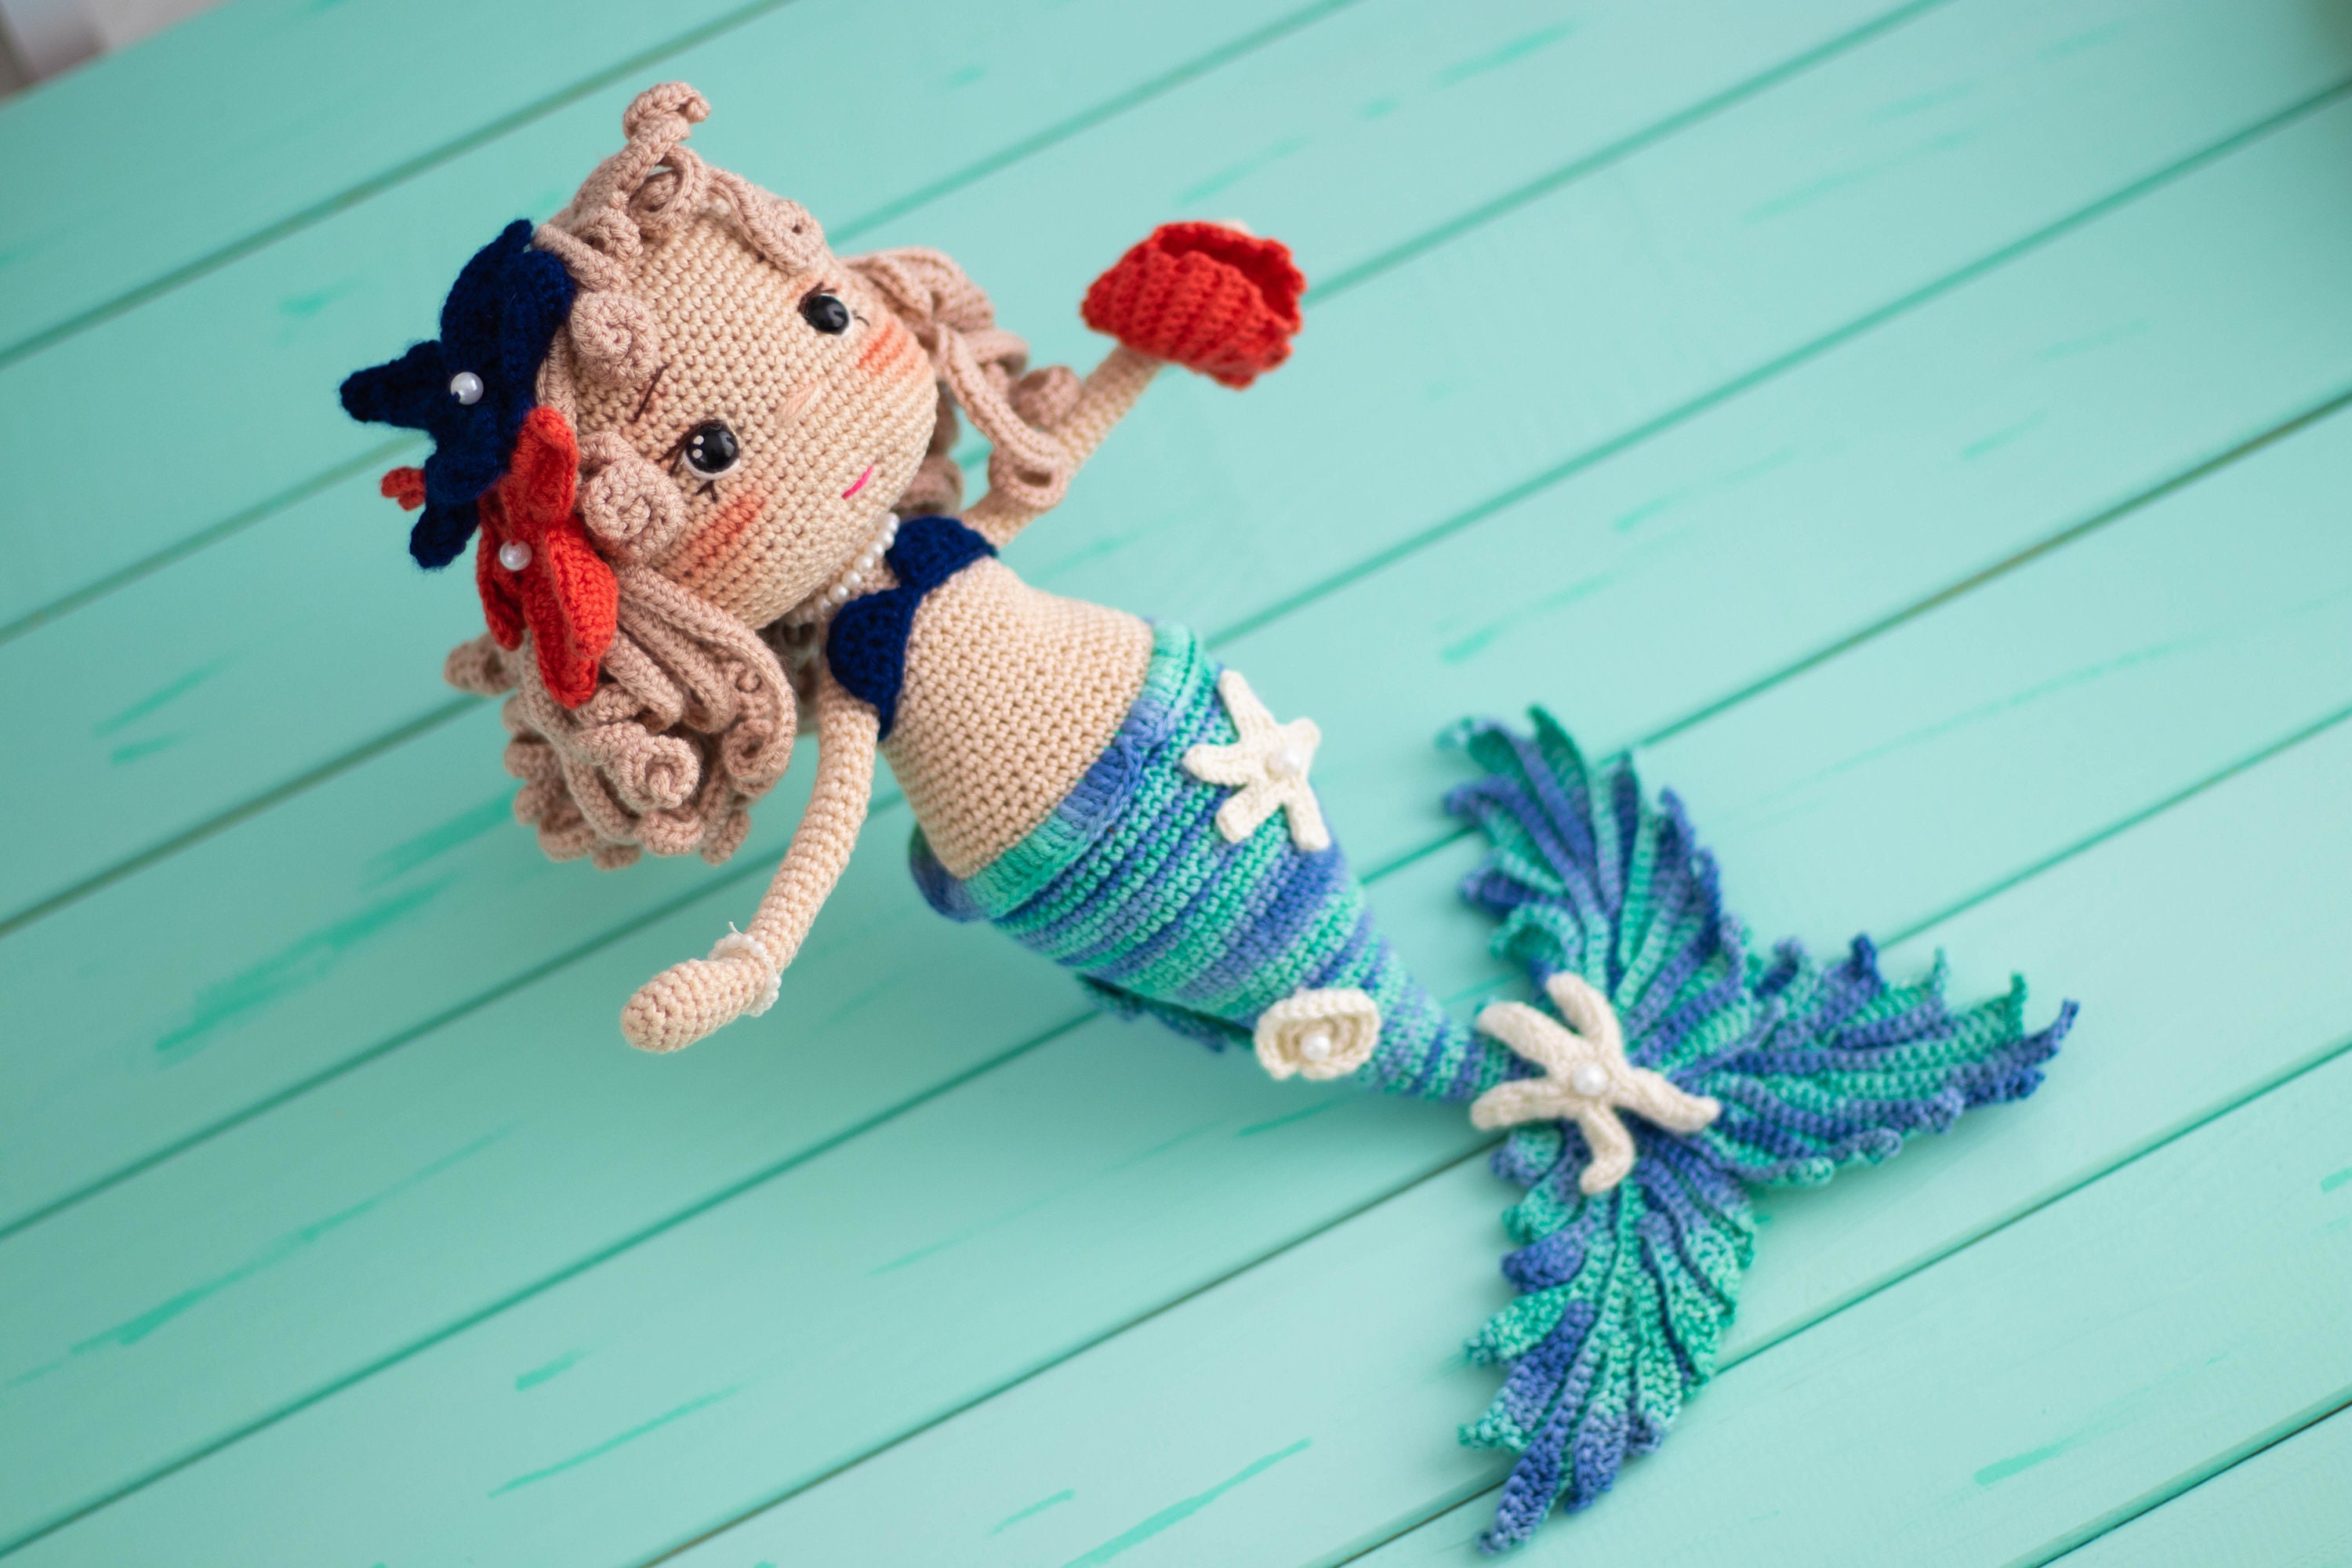 Azalea the Mermaid handmade plush organic toy 